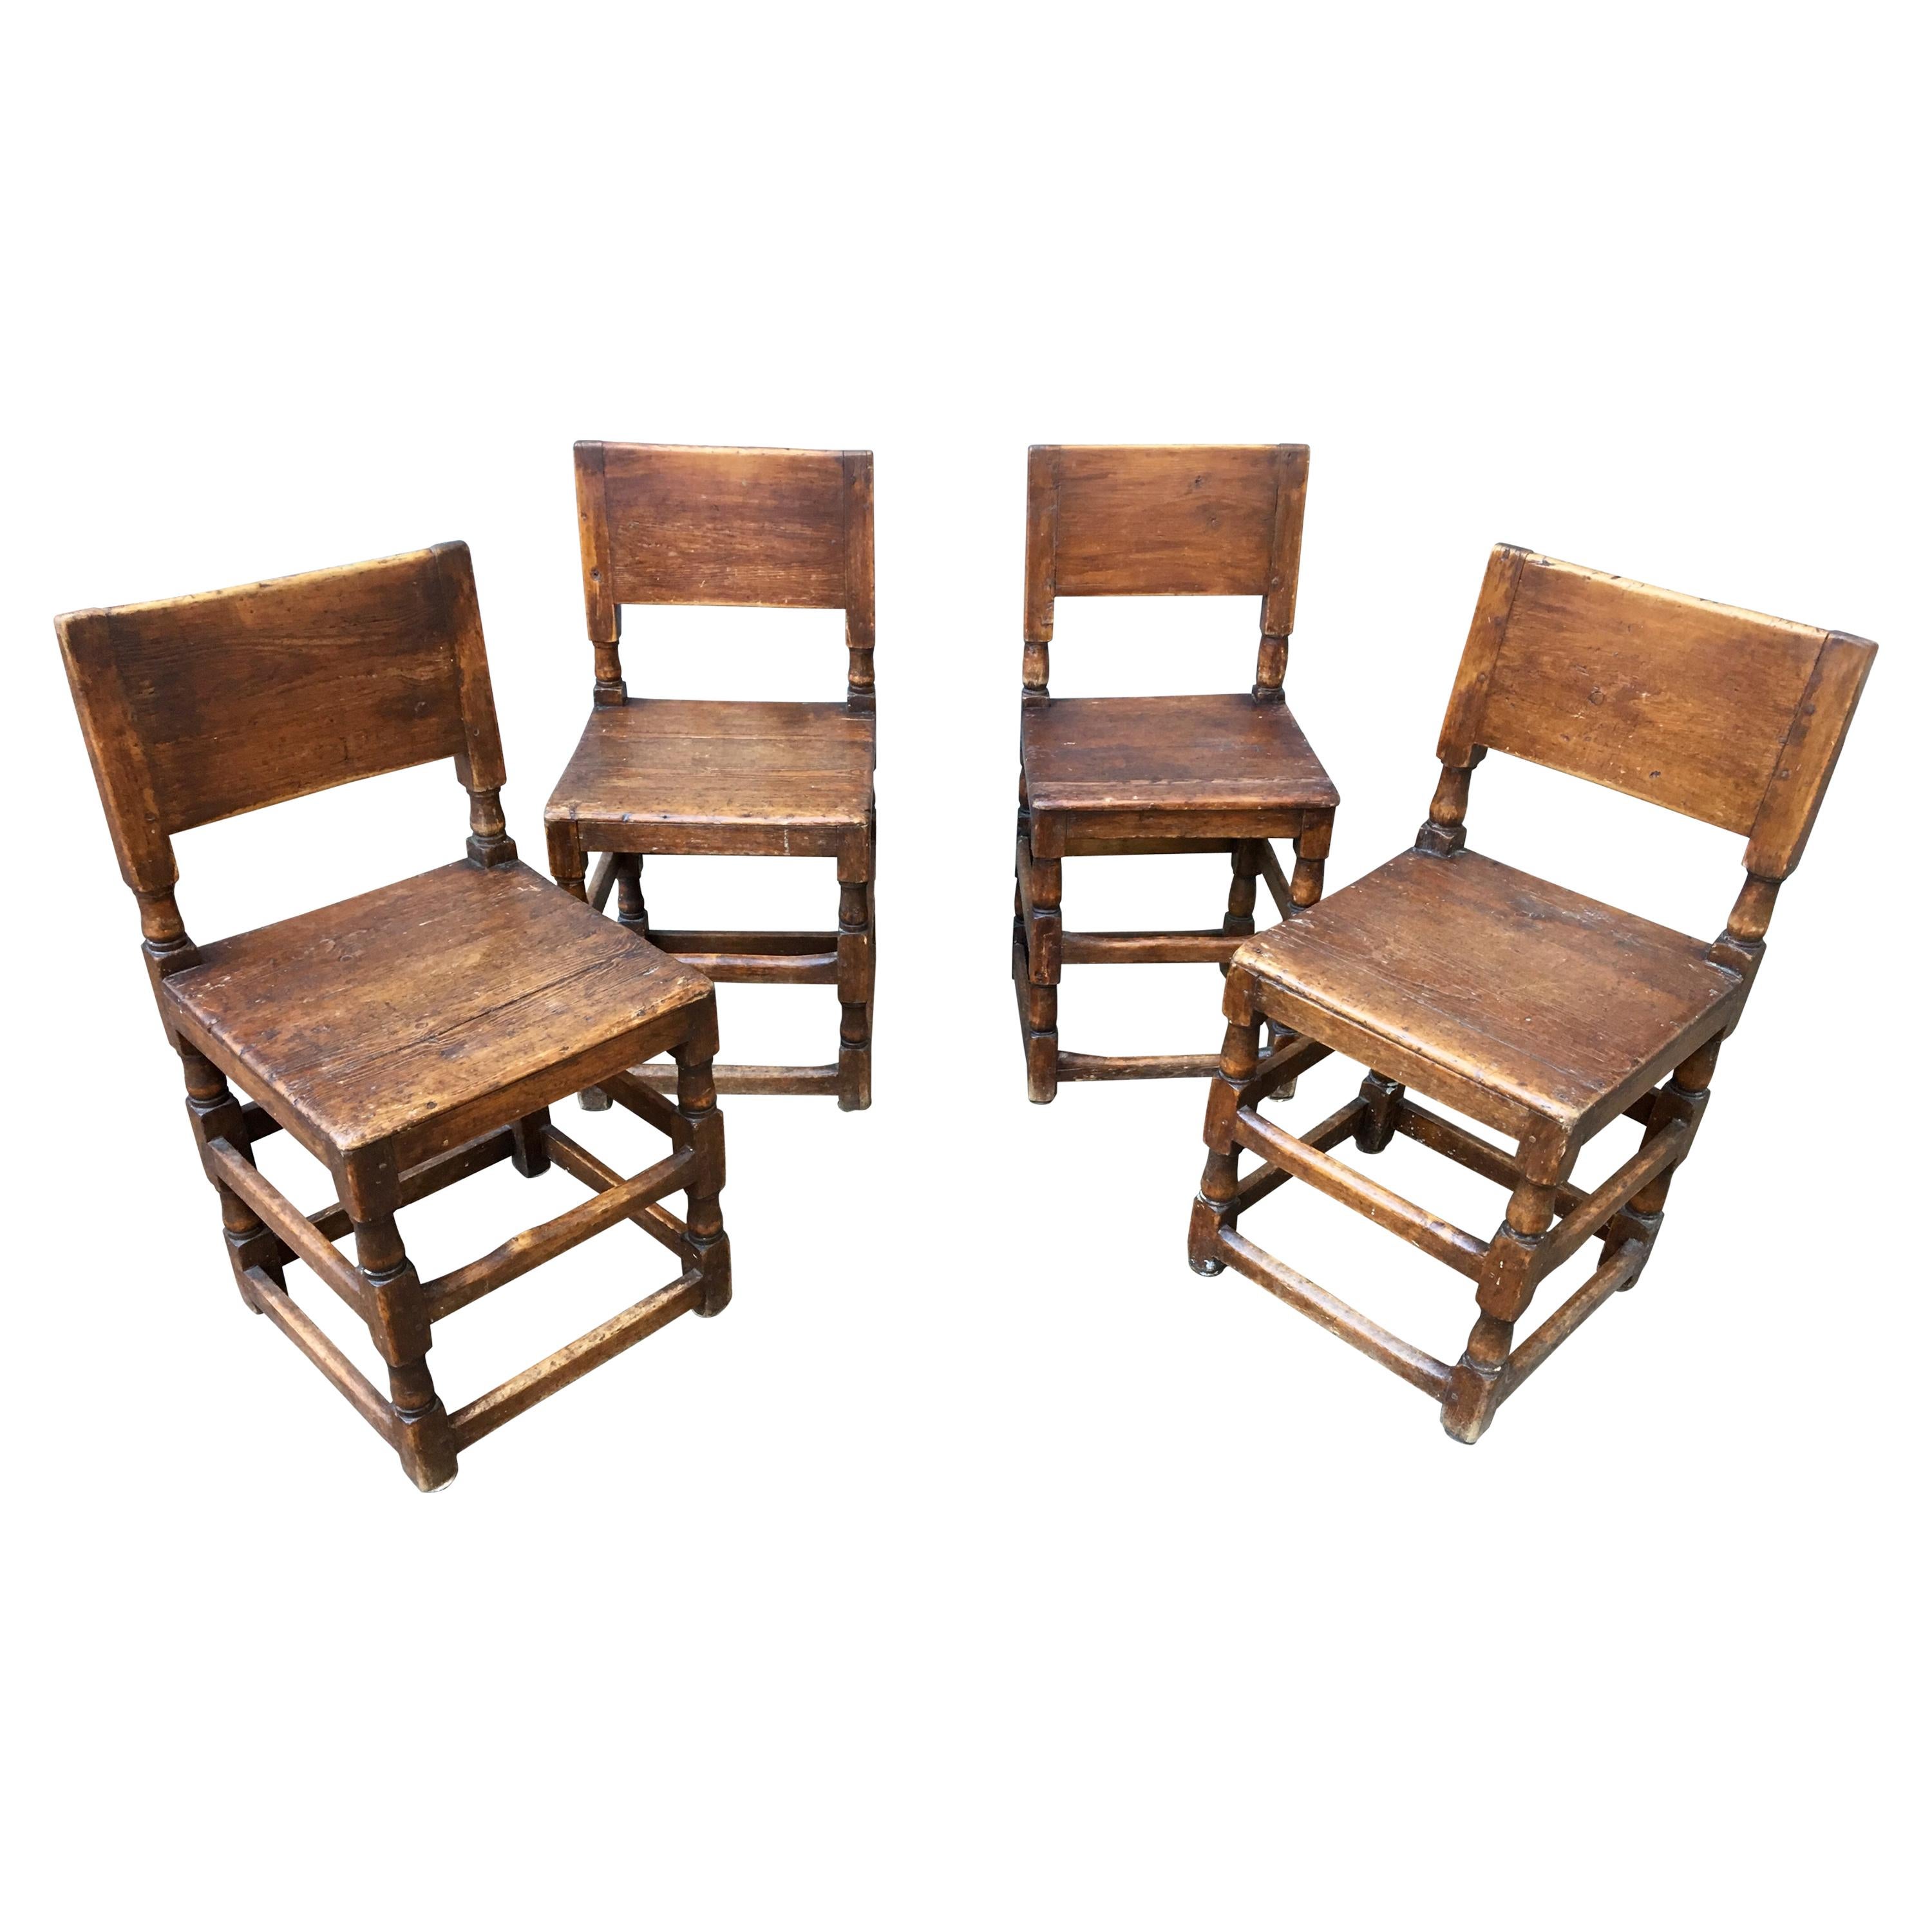 Set of Swedish Early 18th Century Folk Art Chairs